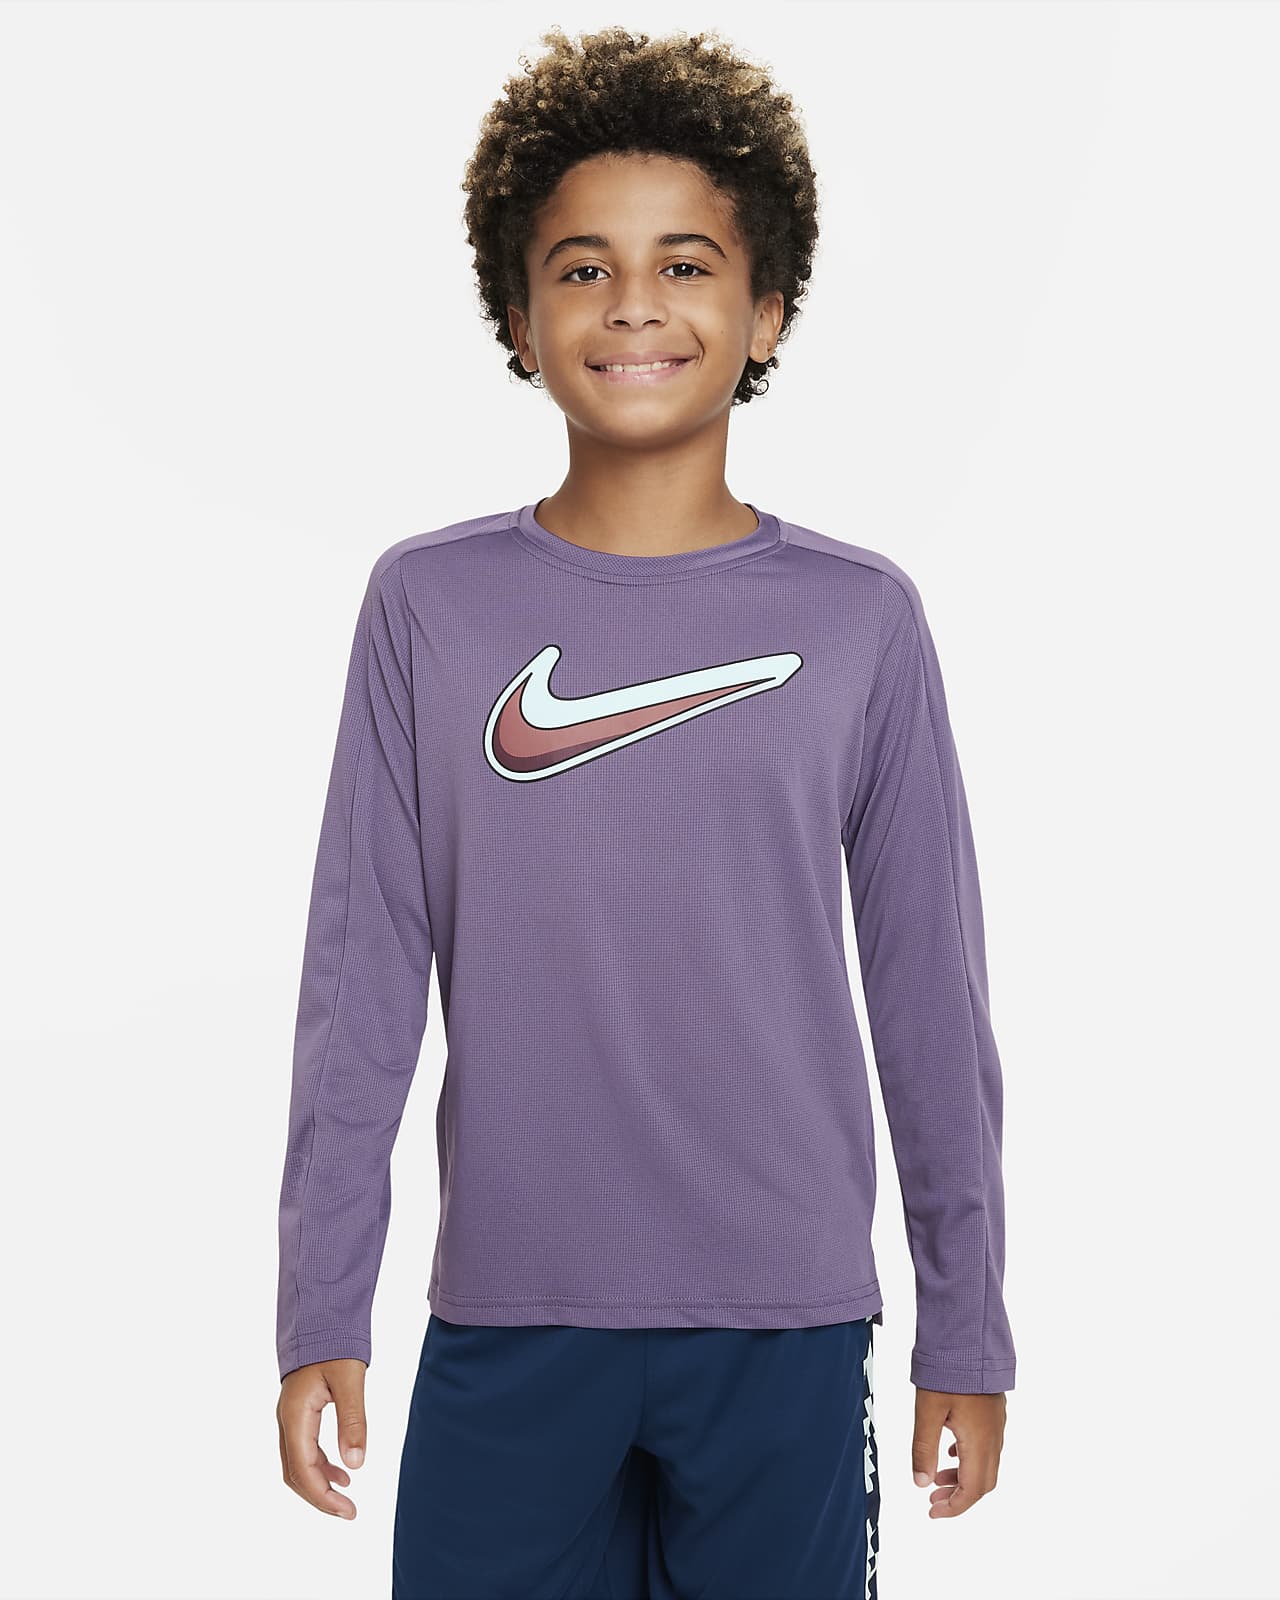 Nike Dri-FIT Performance Big Kids' (Boys') Long-Sleeve Training Top